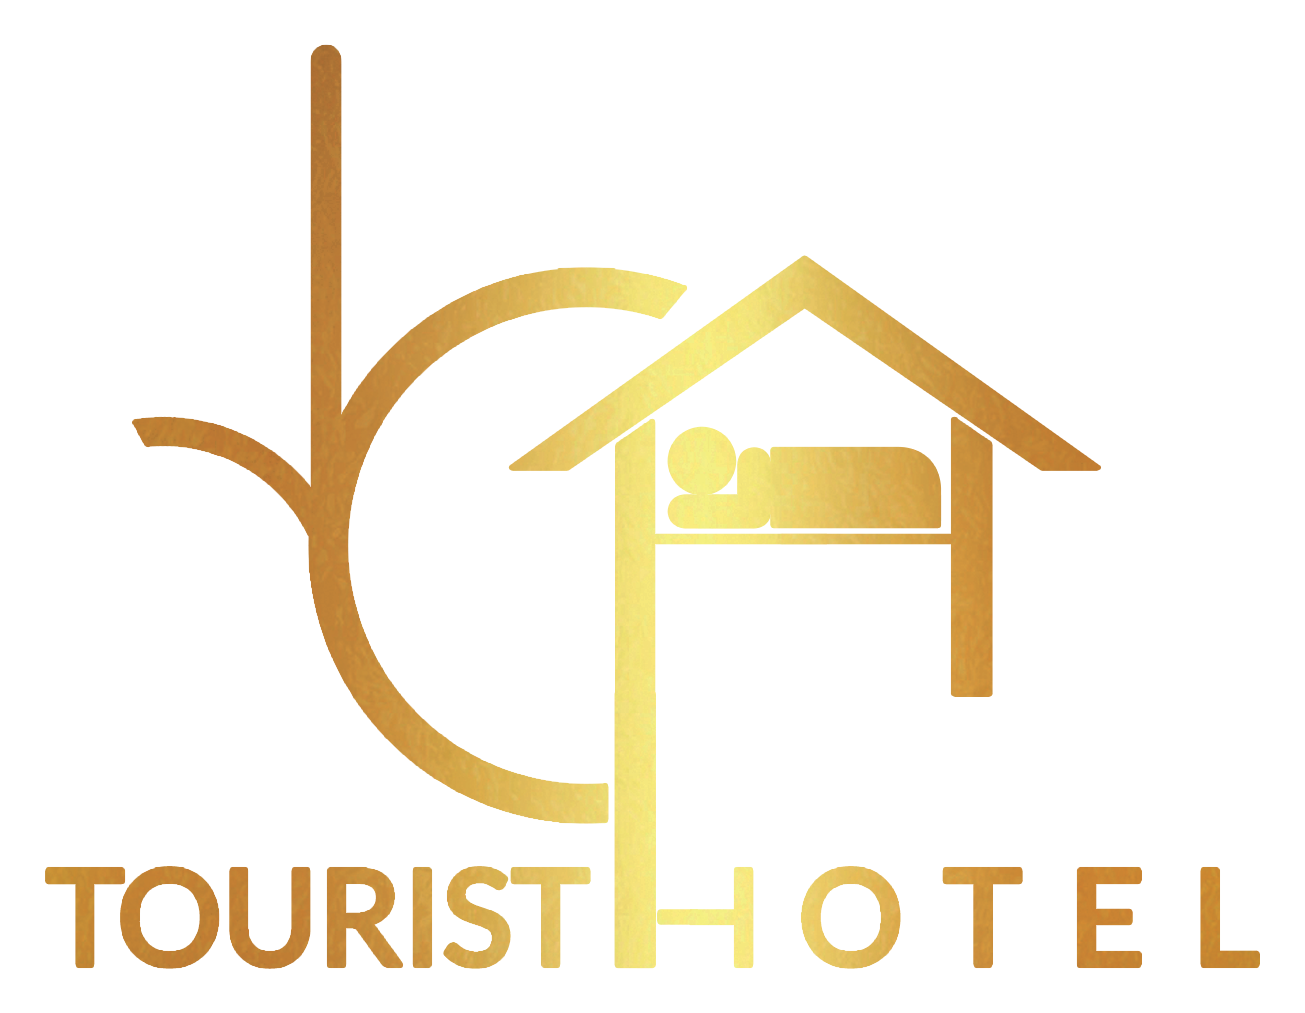 cheapest hostel in cairo - best Cairo hostels - hostels in cairo